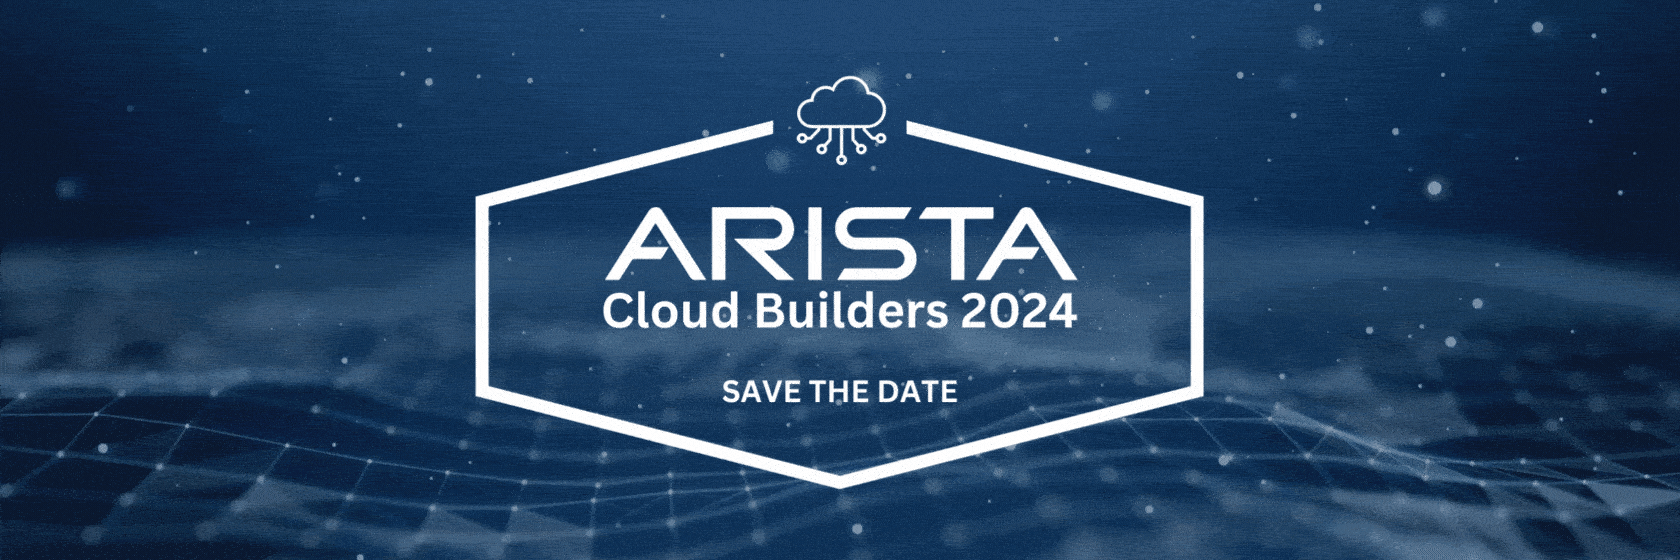 Arista Cloud Builders 2024 Final Banner -compressed